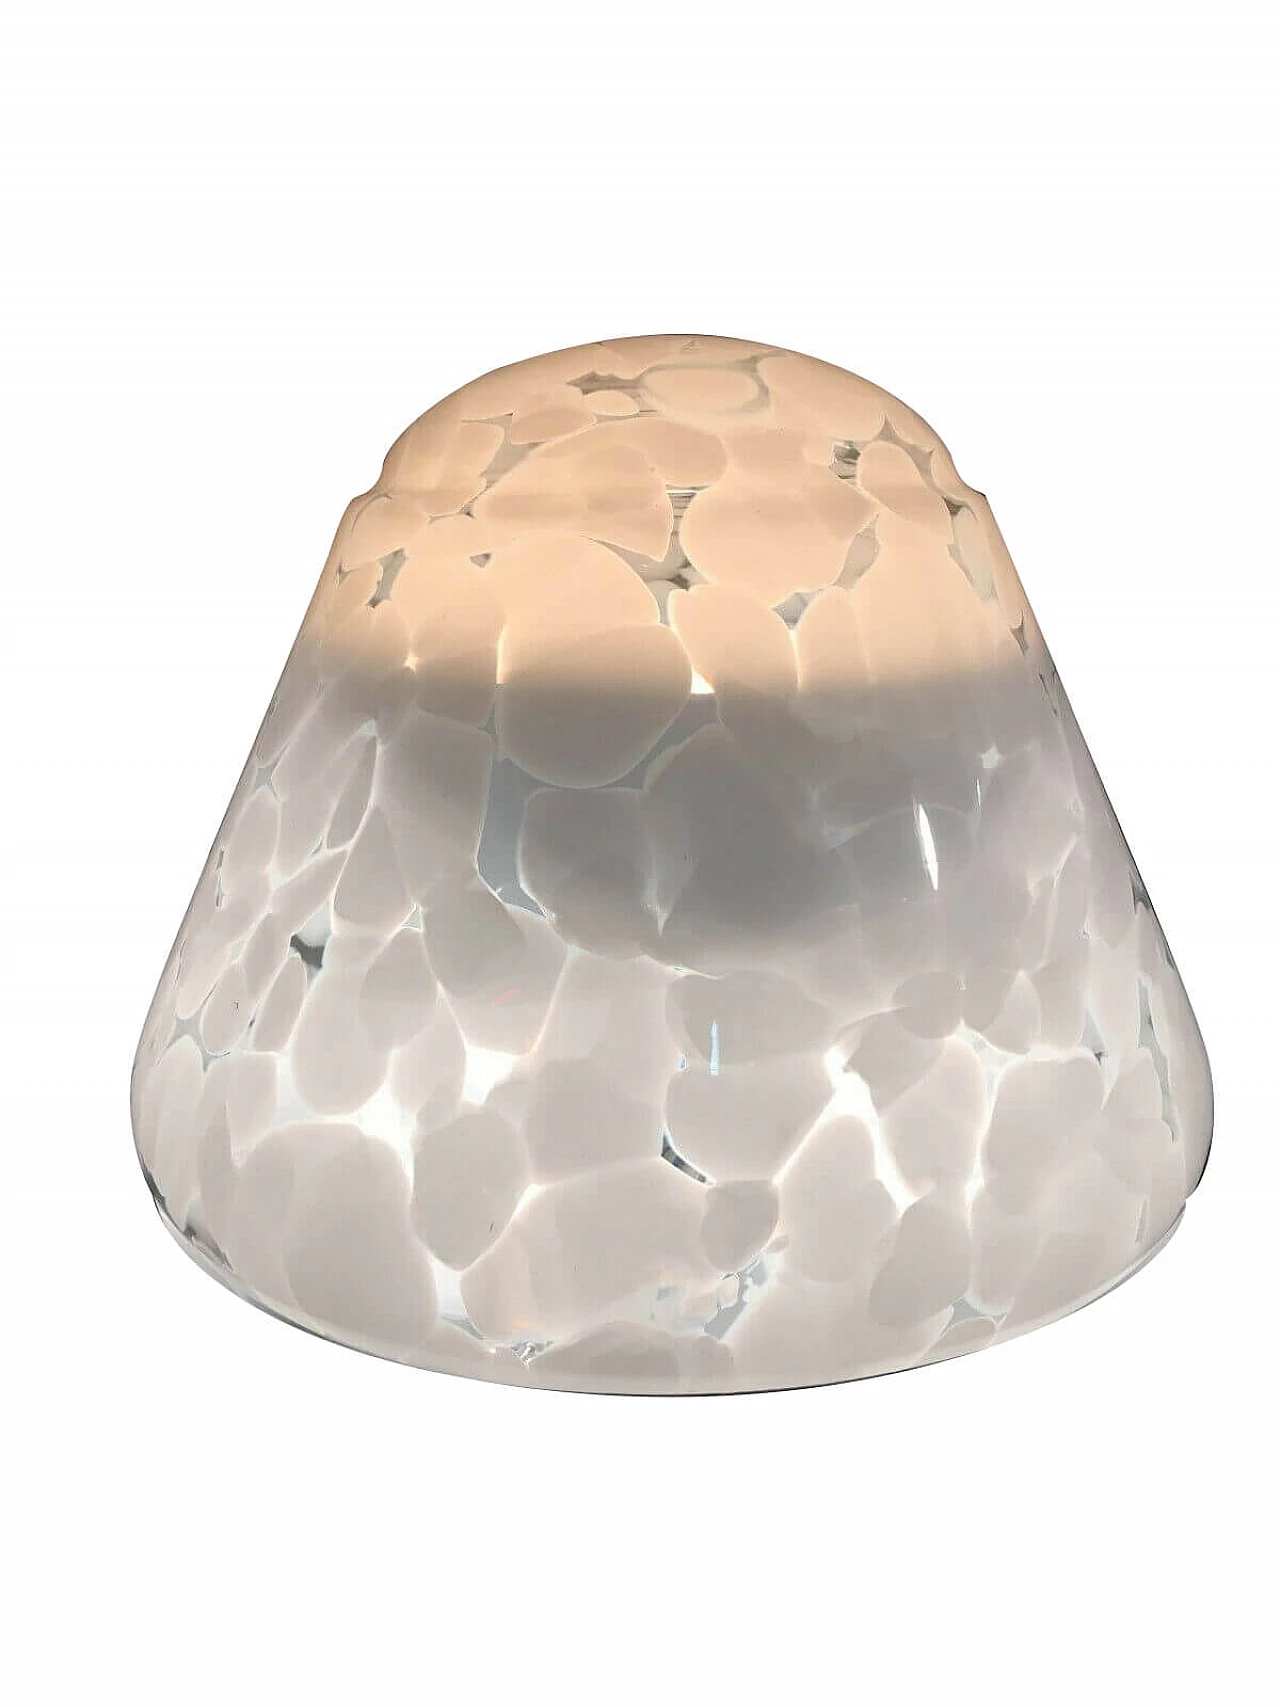 Murano glass table lamp by Vistosi, 70s 1201555